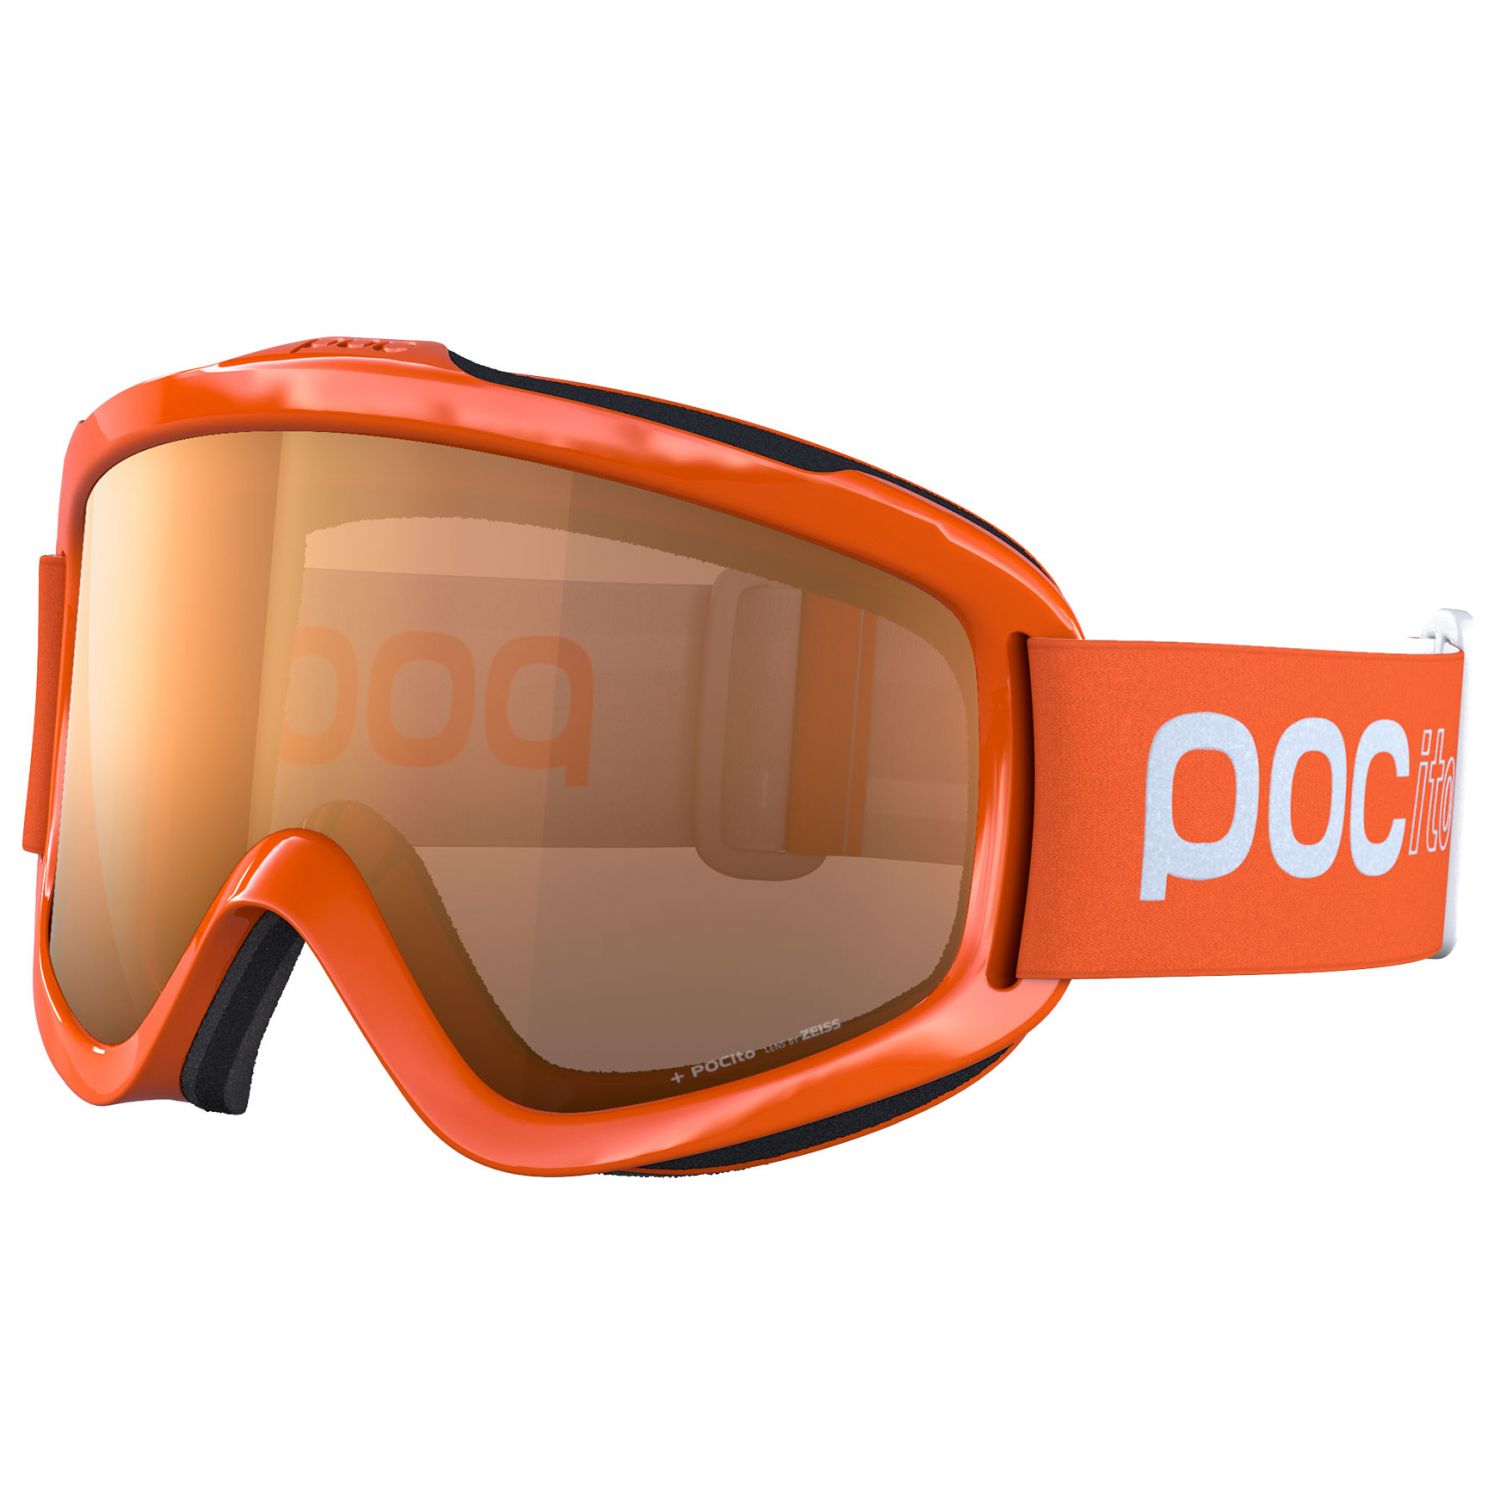 Se POCito Iris skibrille, junior, Fluorscent Orange hos Skisport.dk